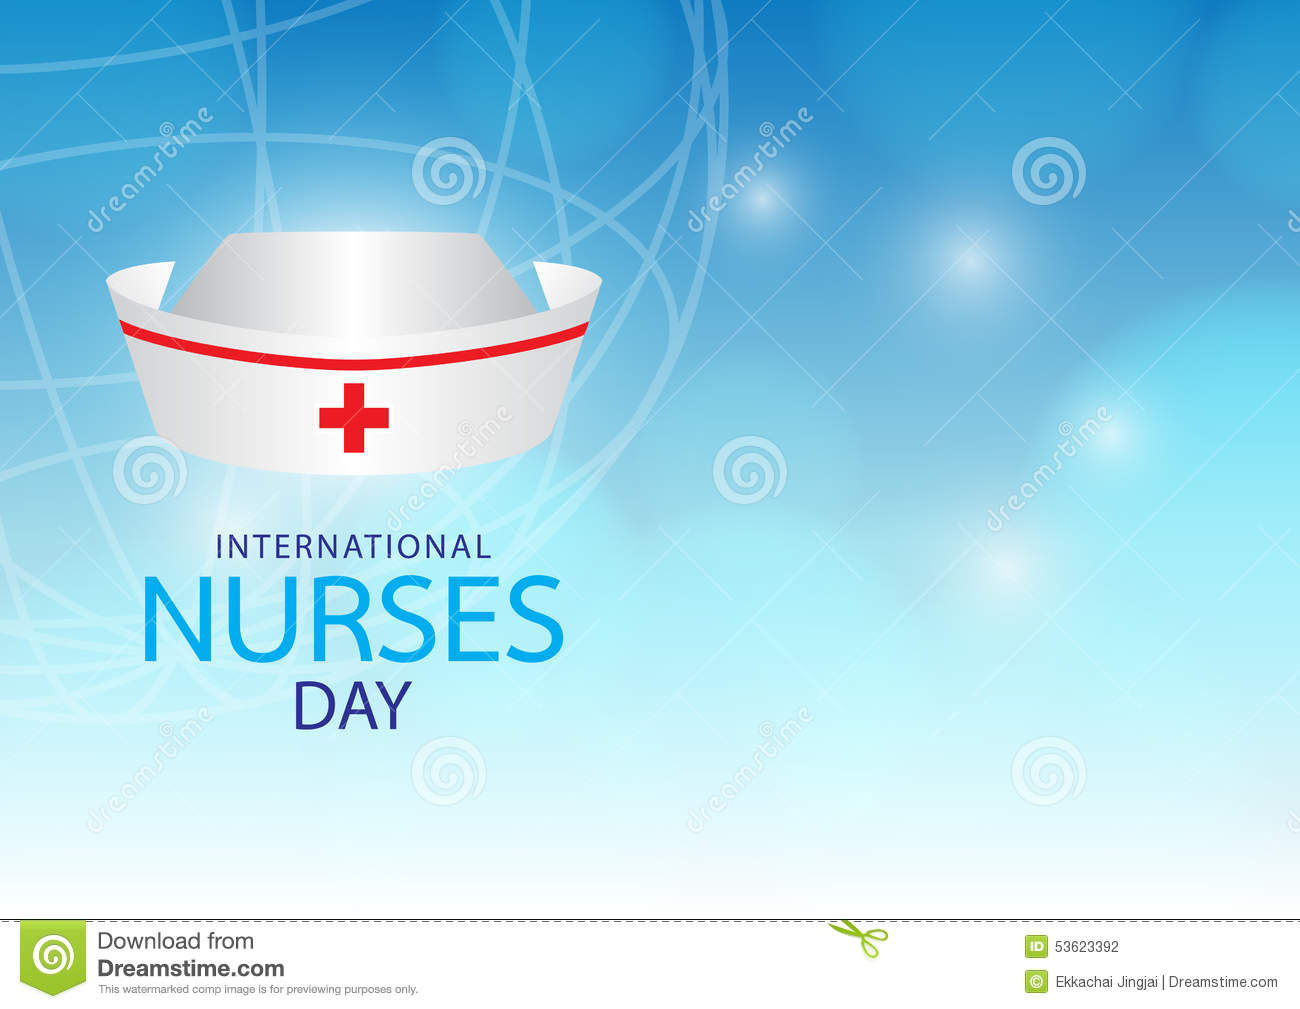 International Nurses Day Picture